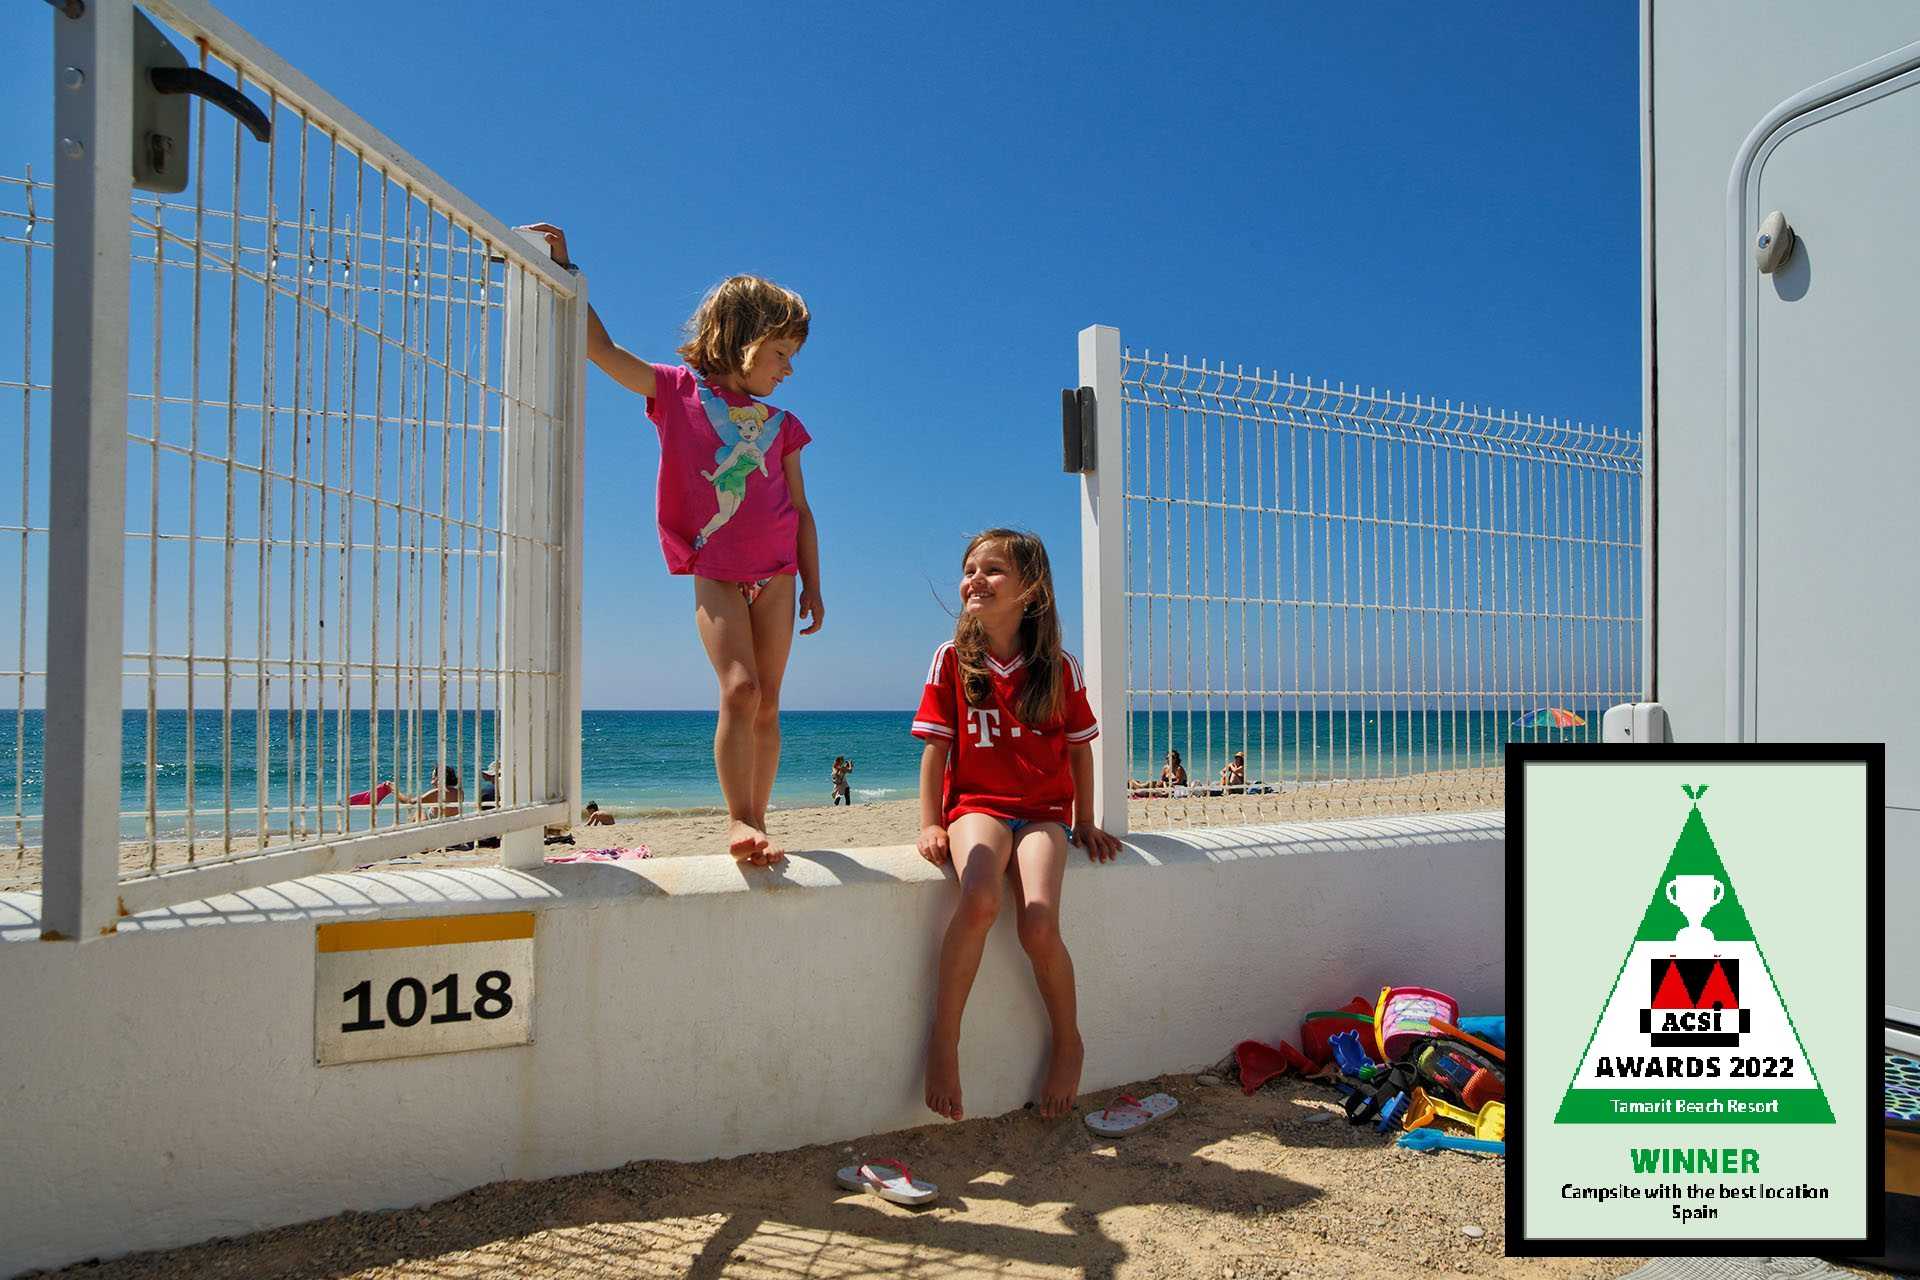 Tamarit Beach Resort campsite with the best location in Spain